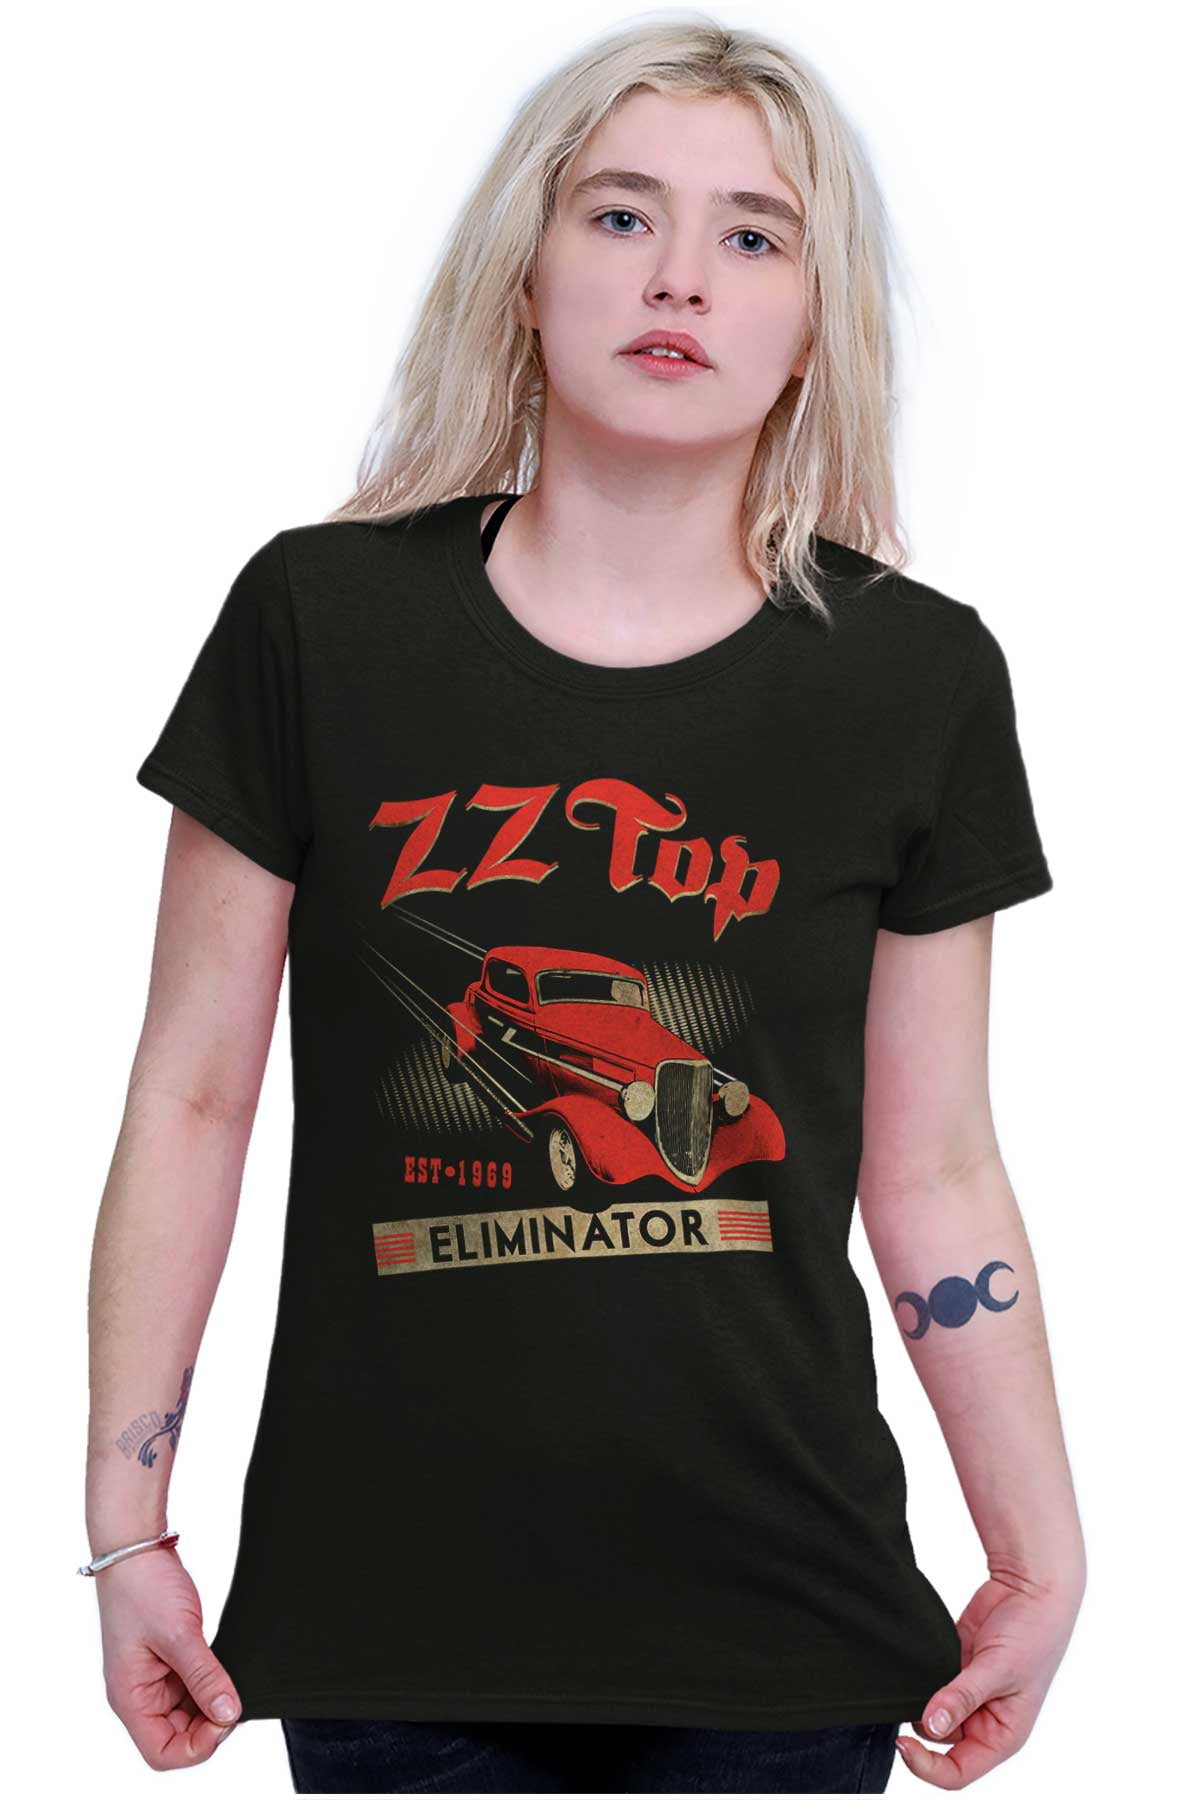 ZZ Top Toddler Boys Kids Short Sleeve T-Shirt Black Eliminator Crewneck Tee 